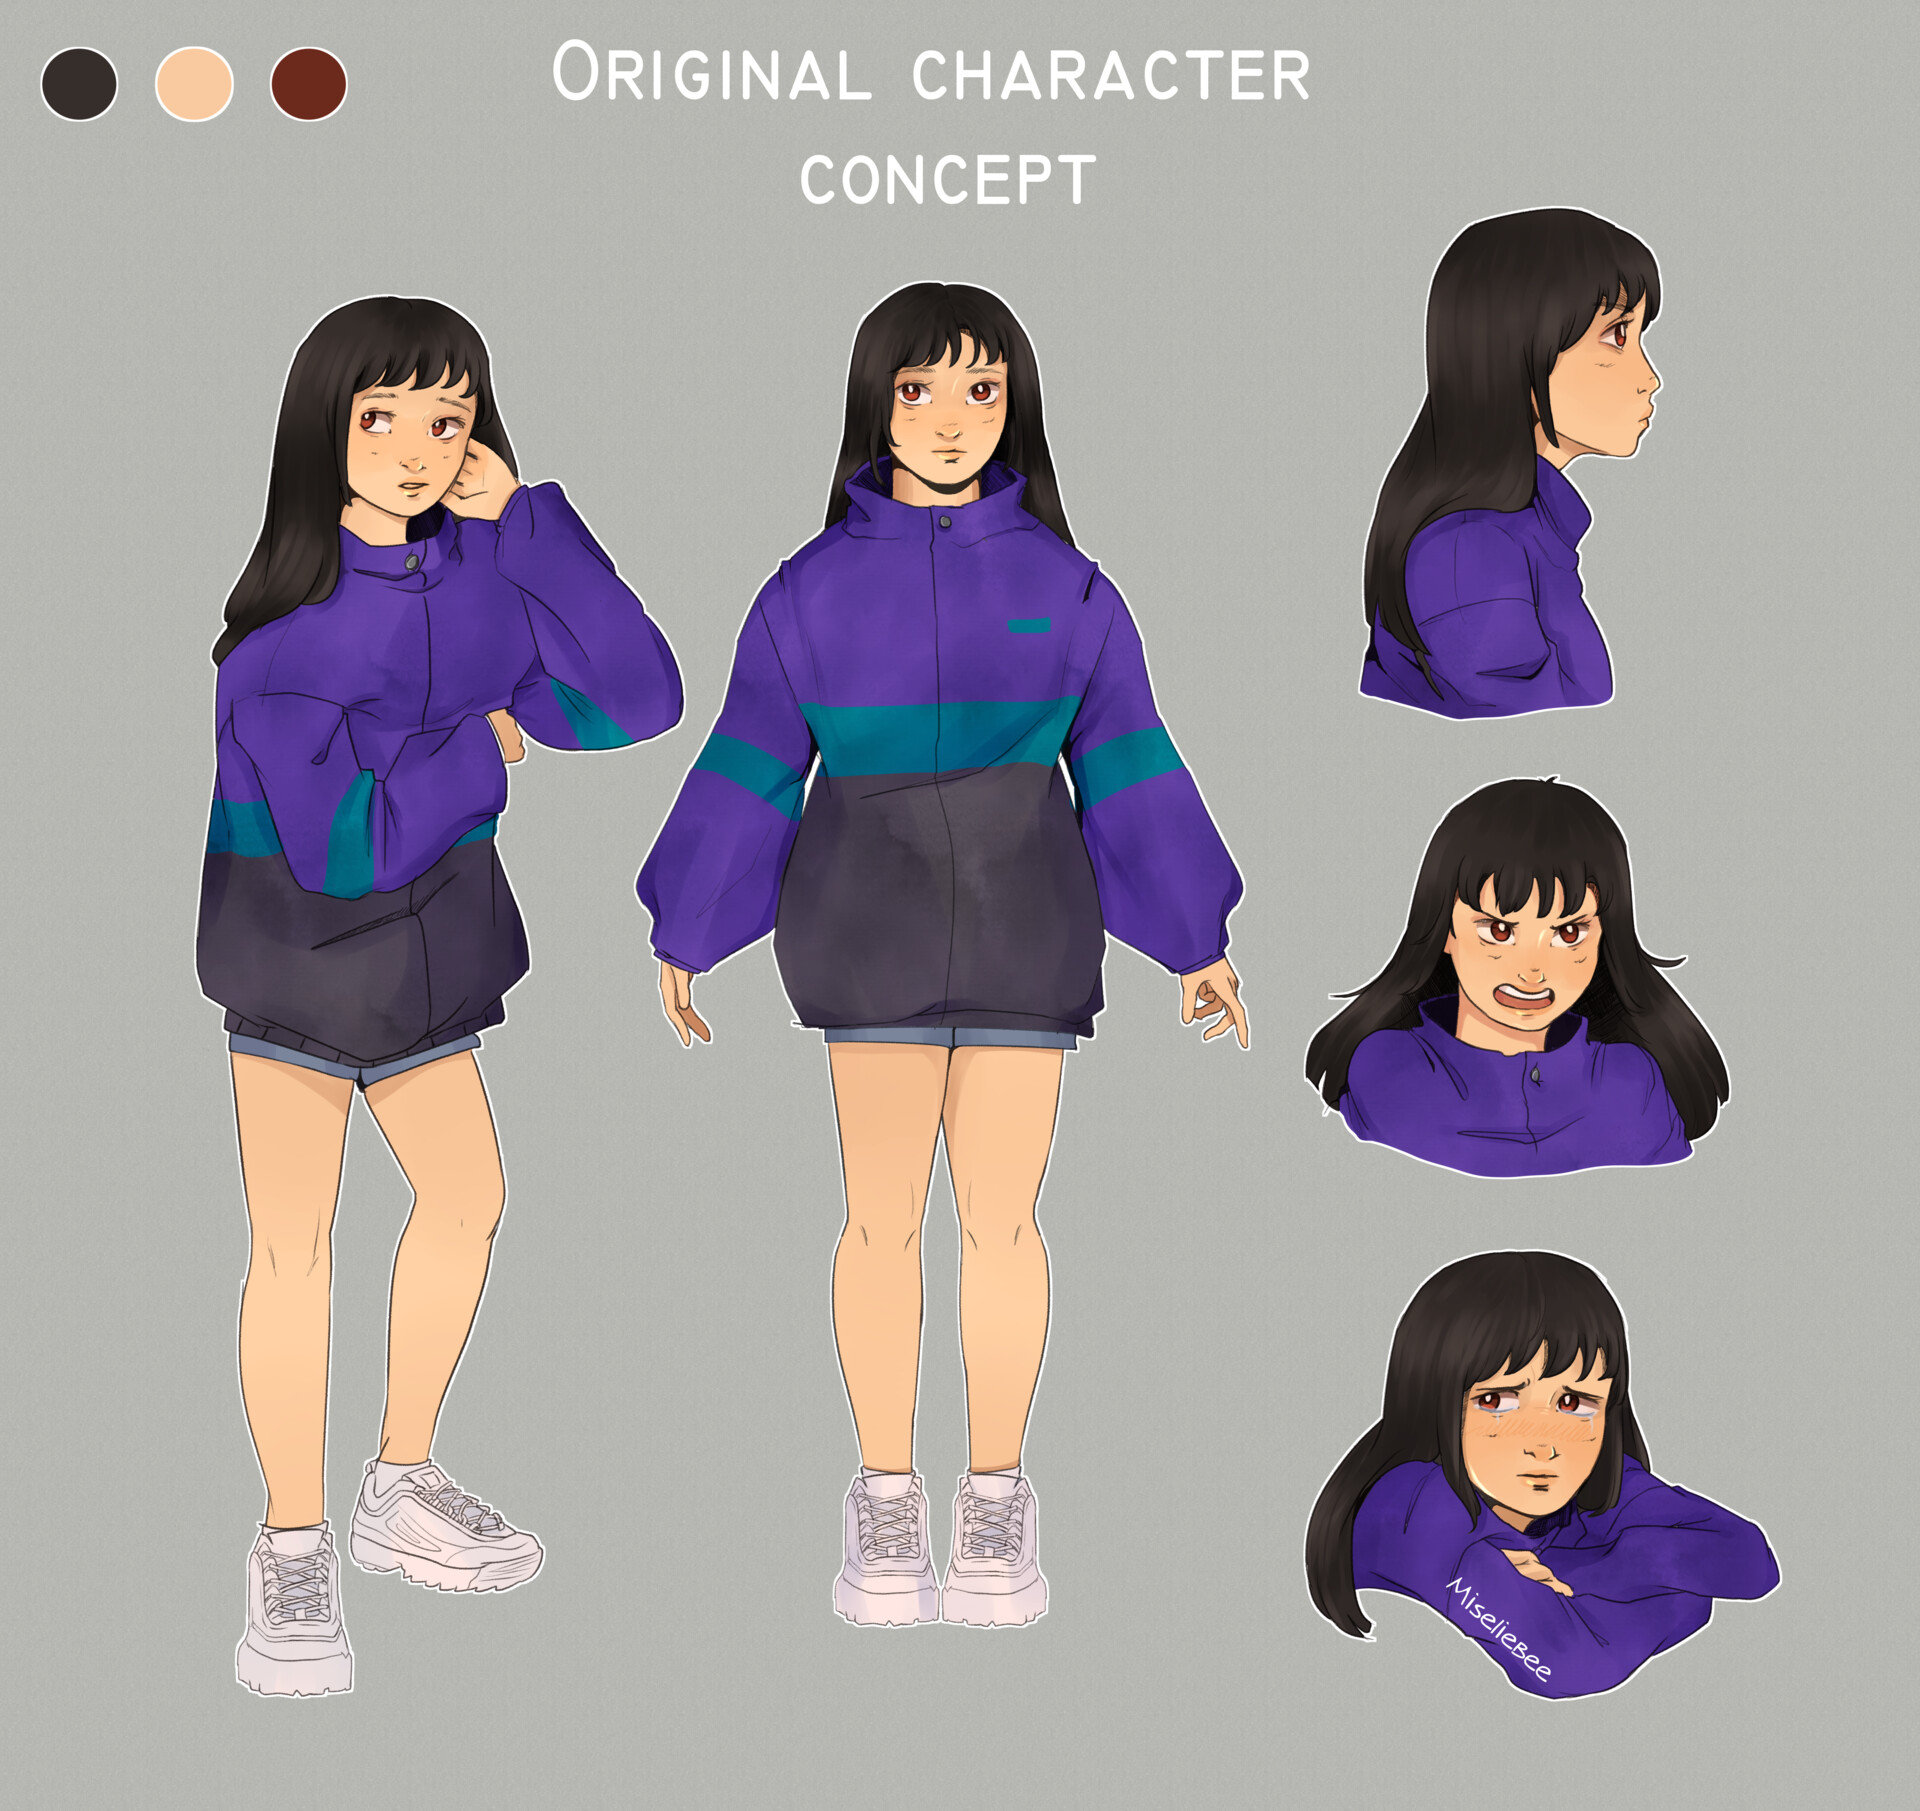 ArtStation - Original character design - Camila